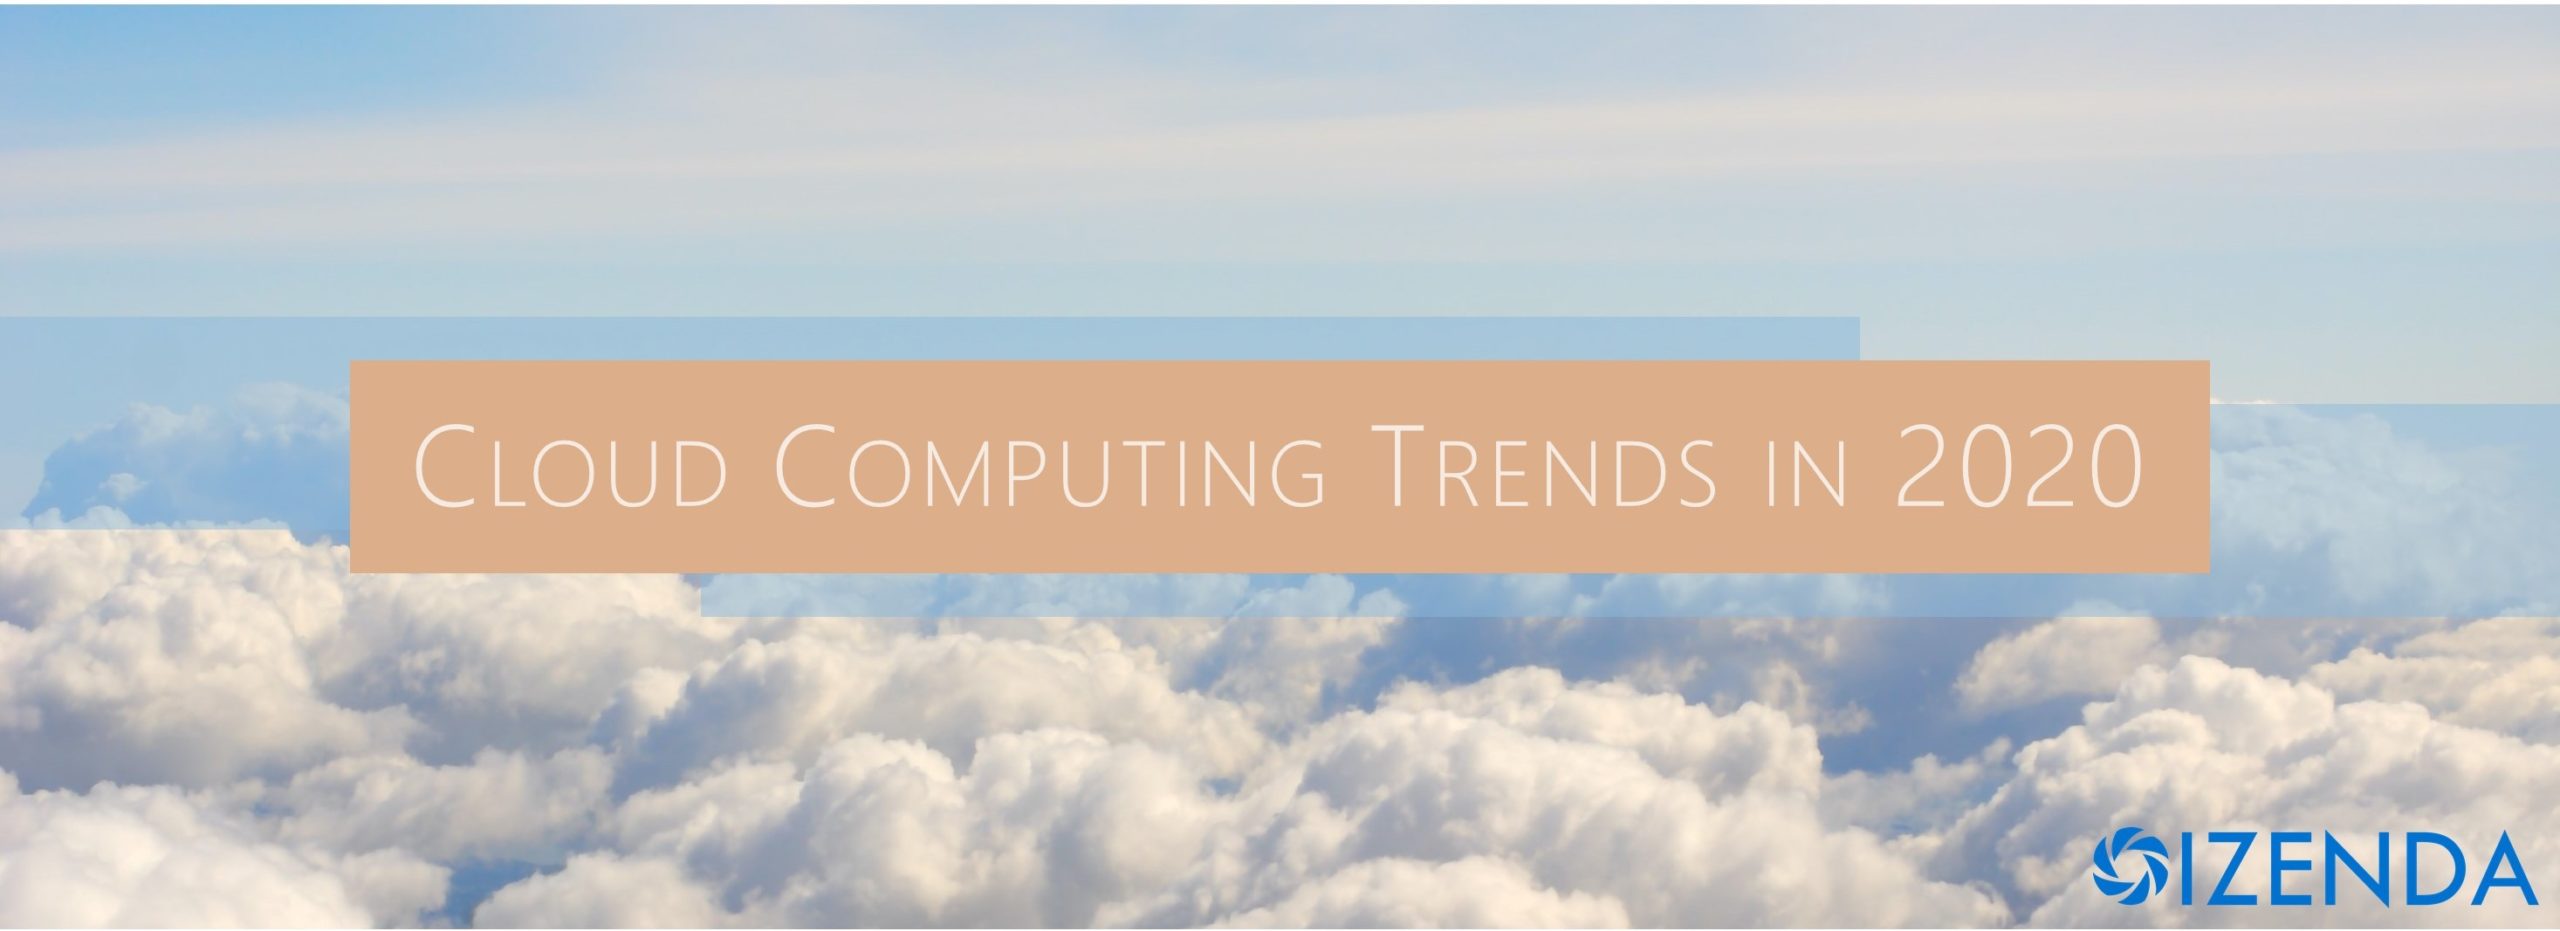 cloud computing trends in 2020